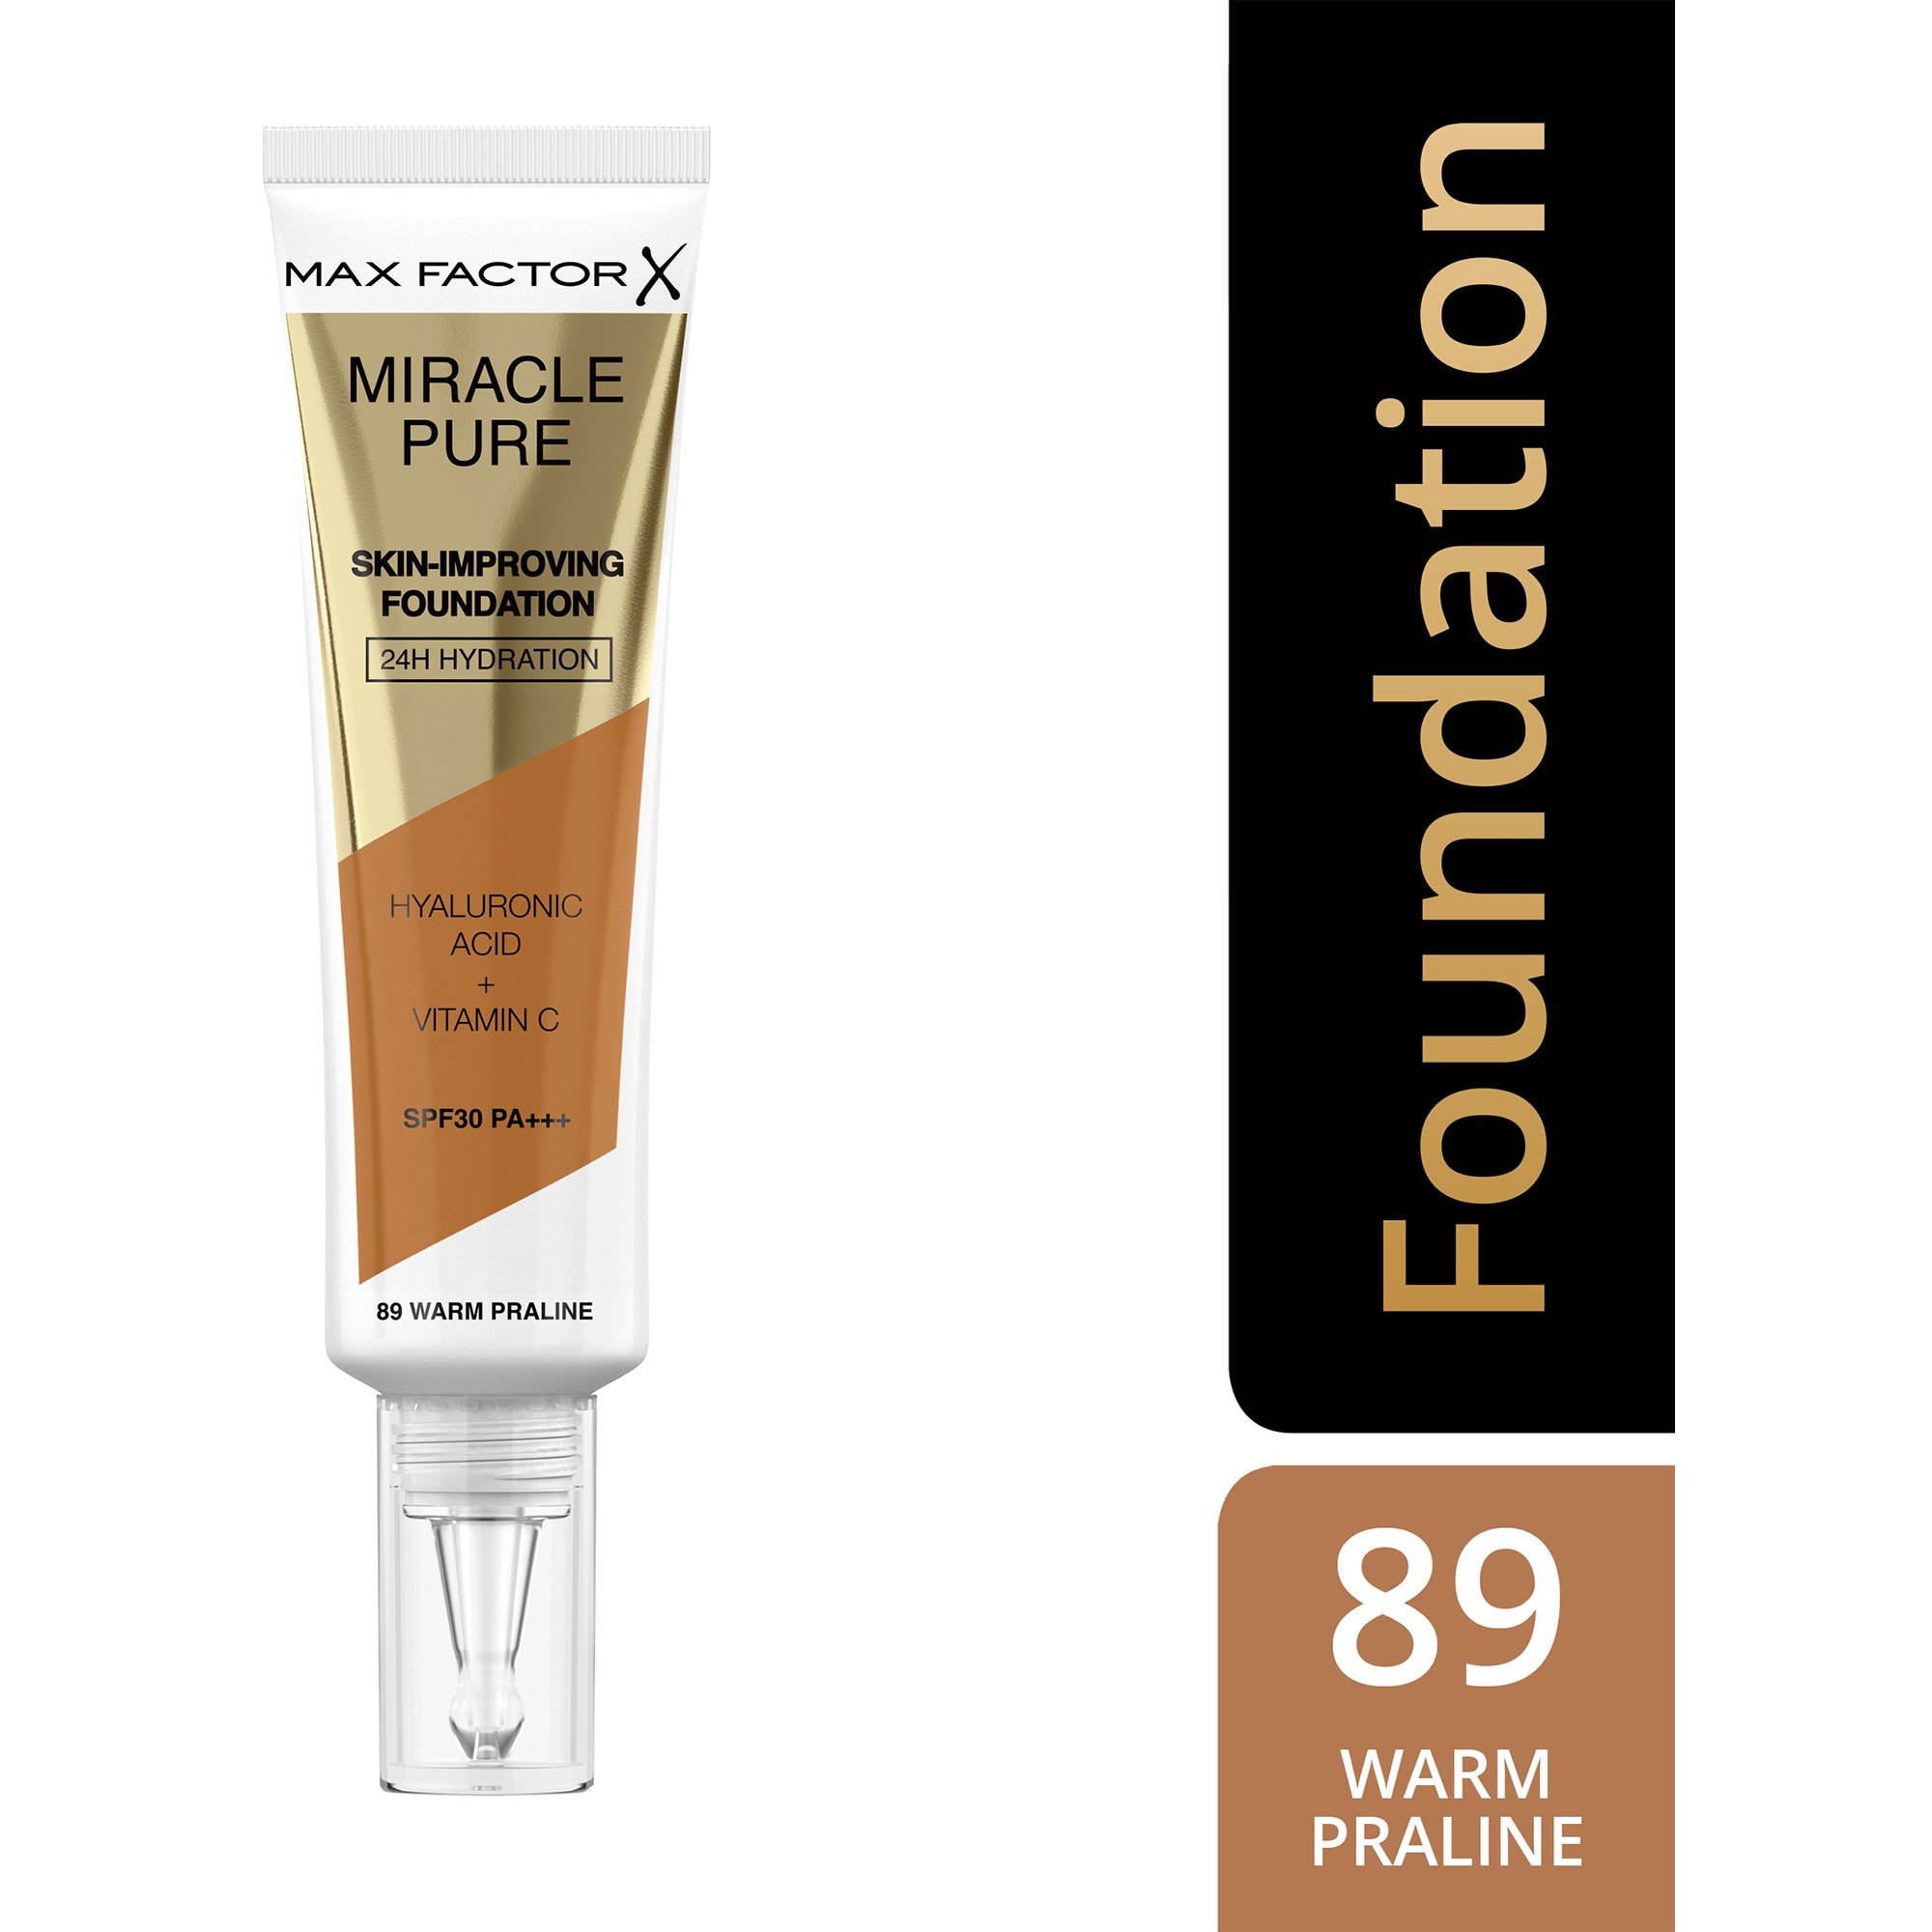 Bilde av Max Factor Miracle Pure Skin-improving Foundation 89 Warm Praline